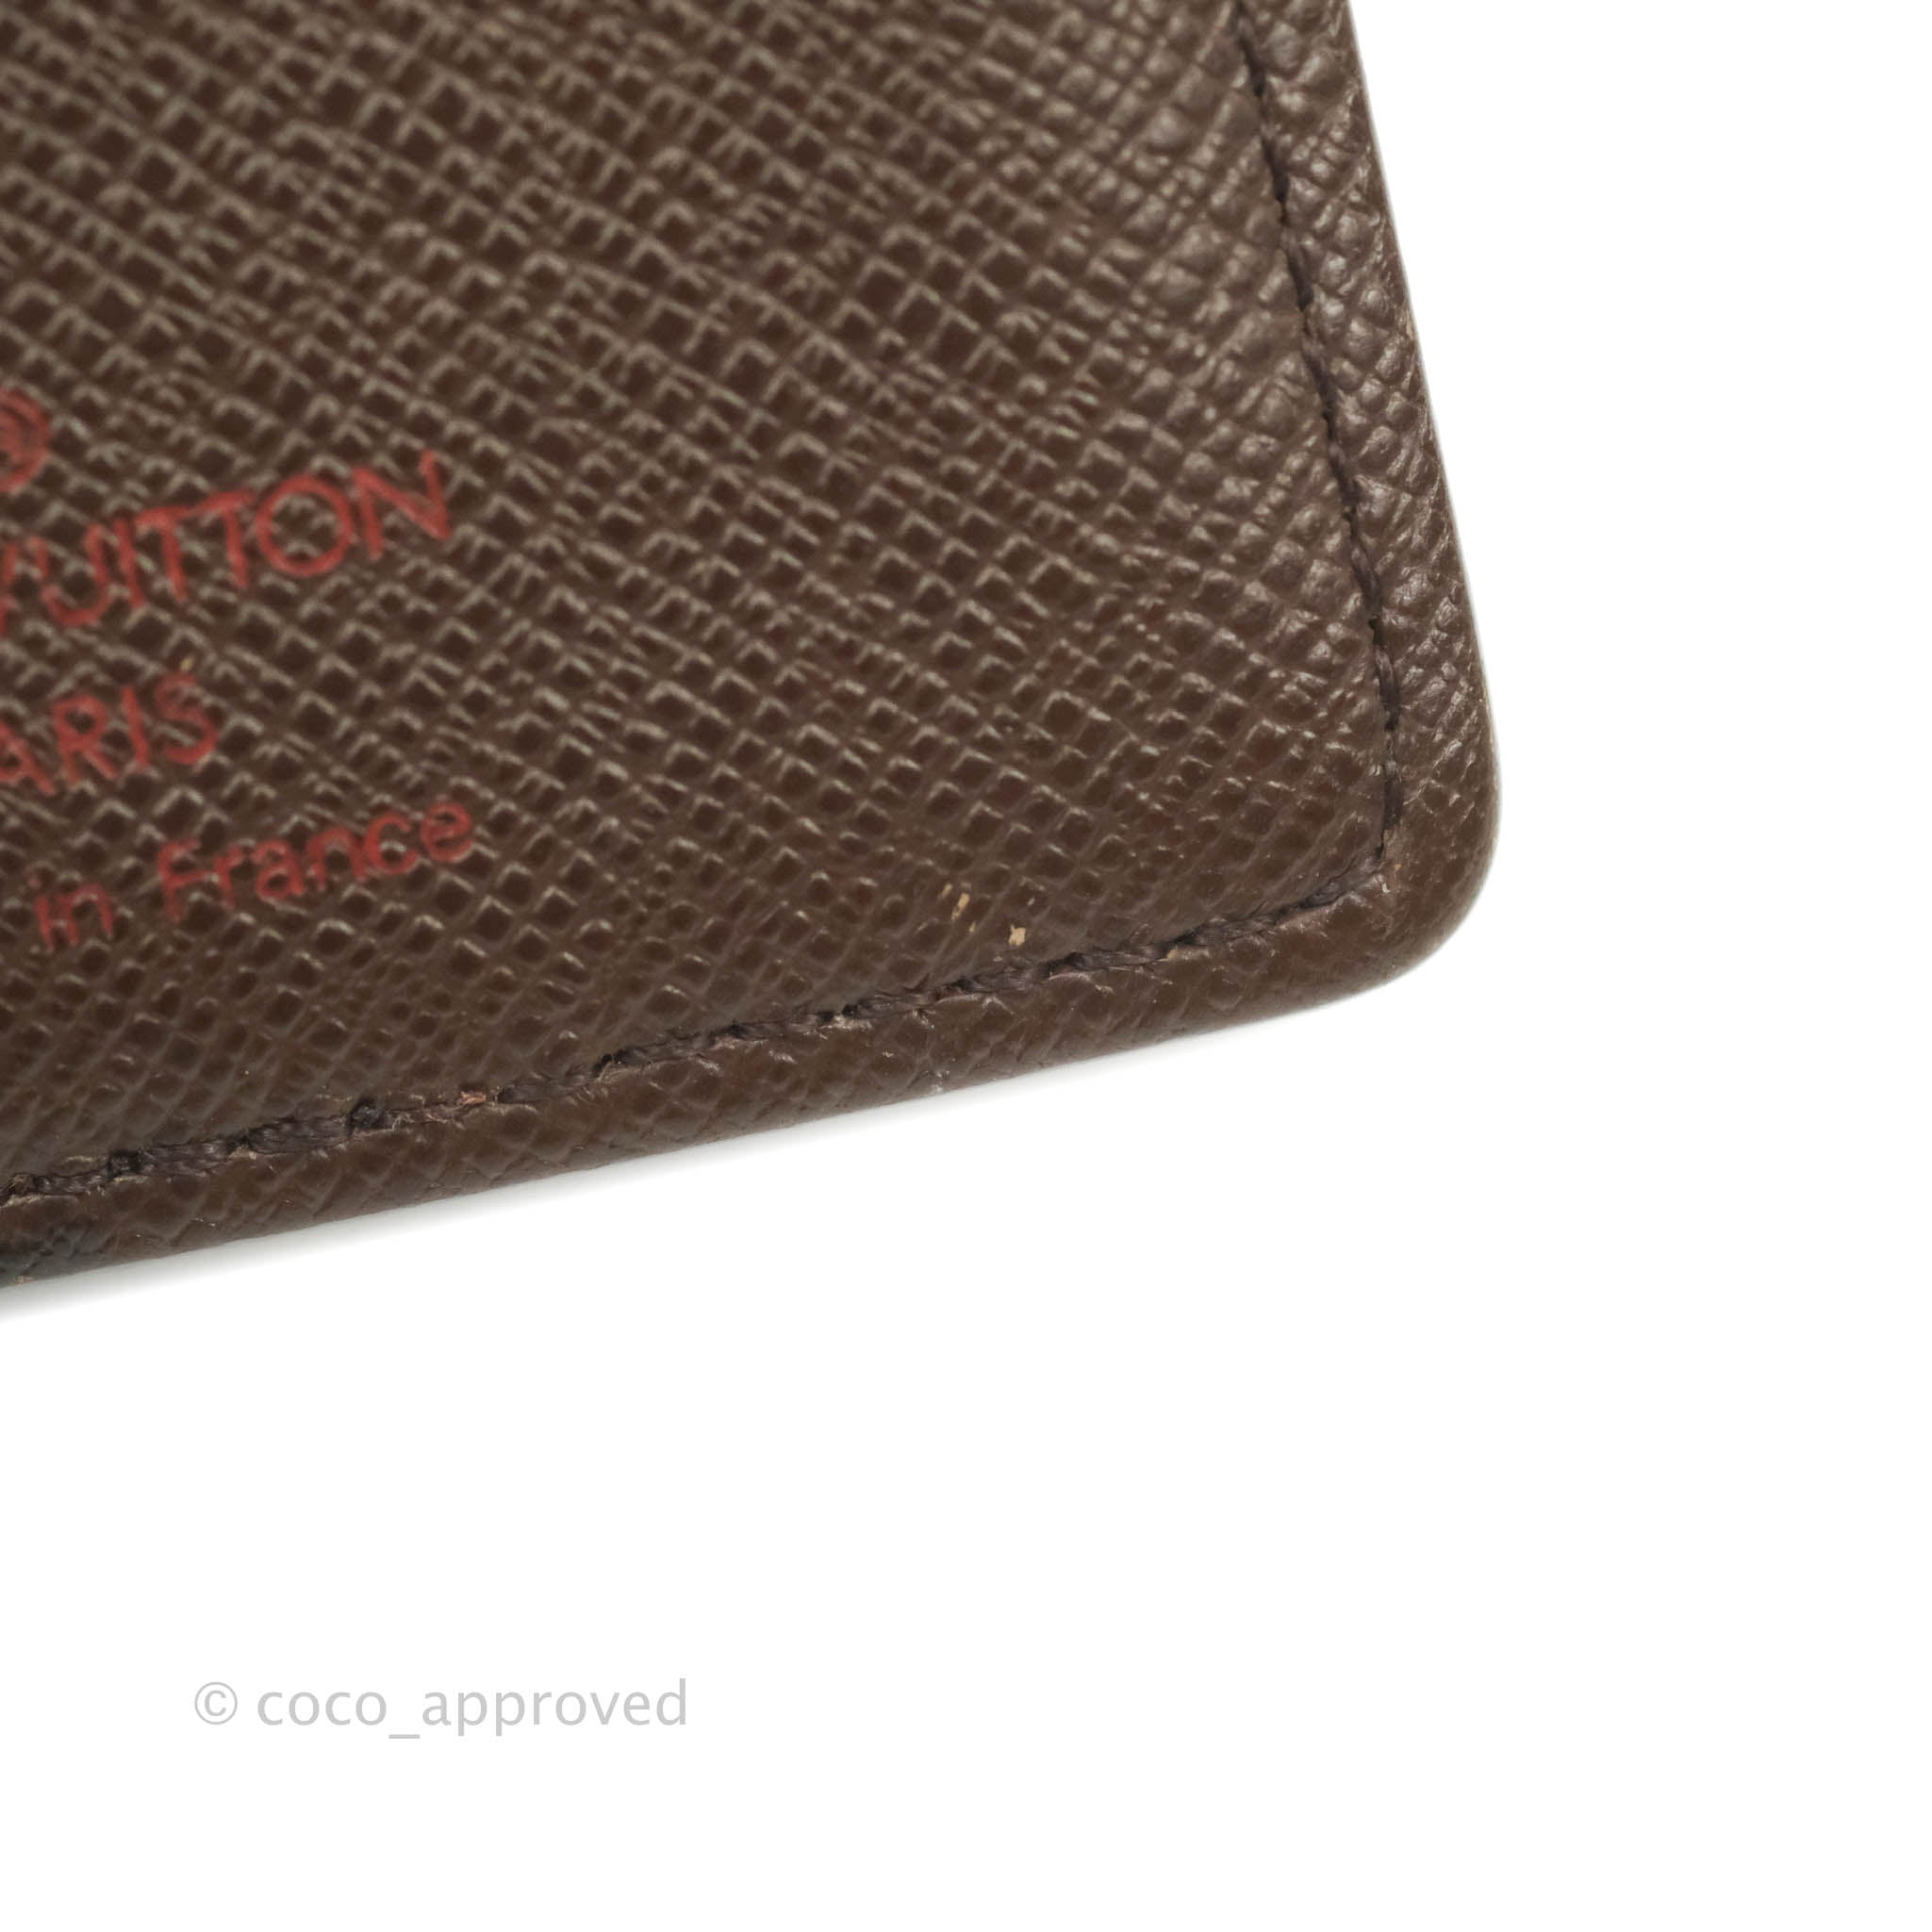 Louis Vuitton Long Wallet Portfoille Braza Damier N60017 Men's